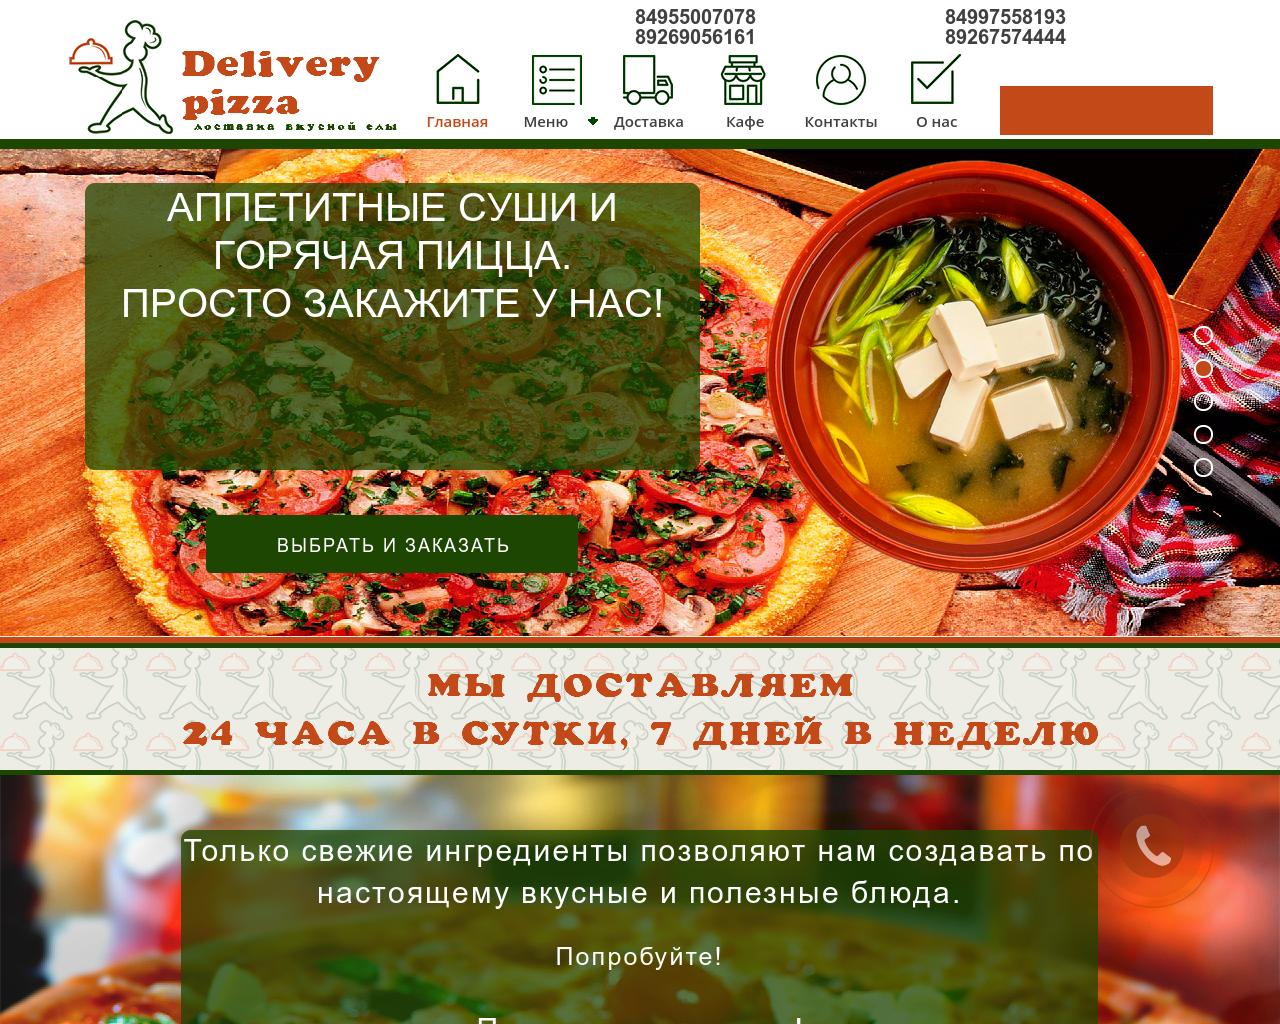 Изображение сайта delivery-pizza.ru в разрешении 1280x1024